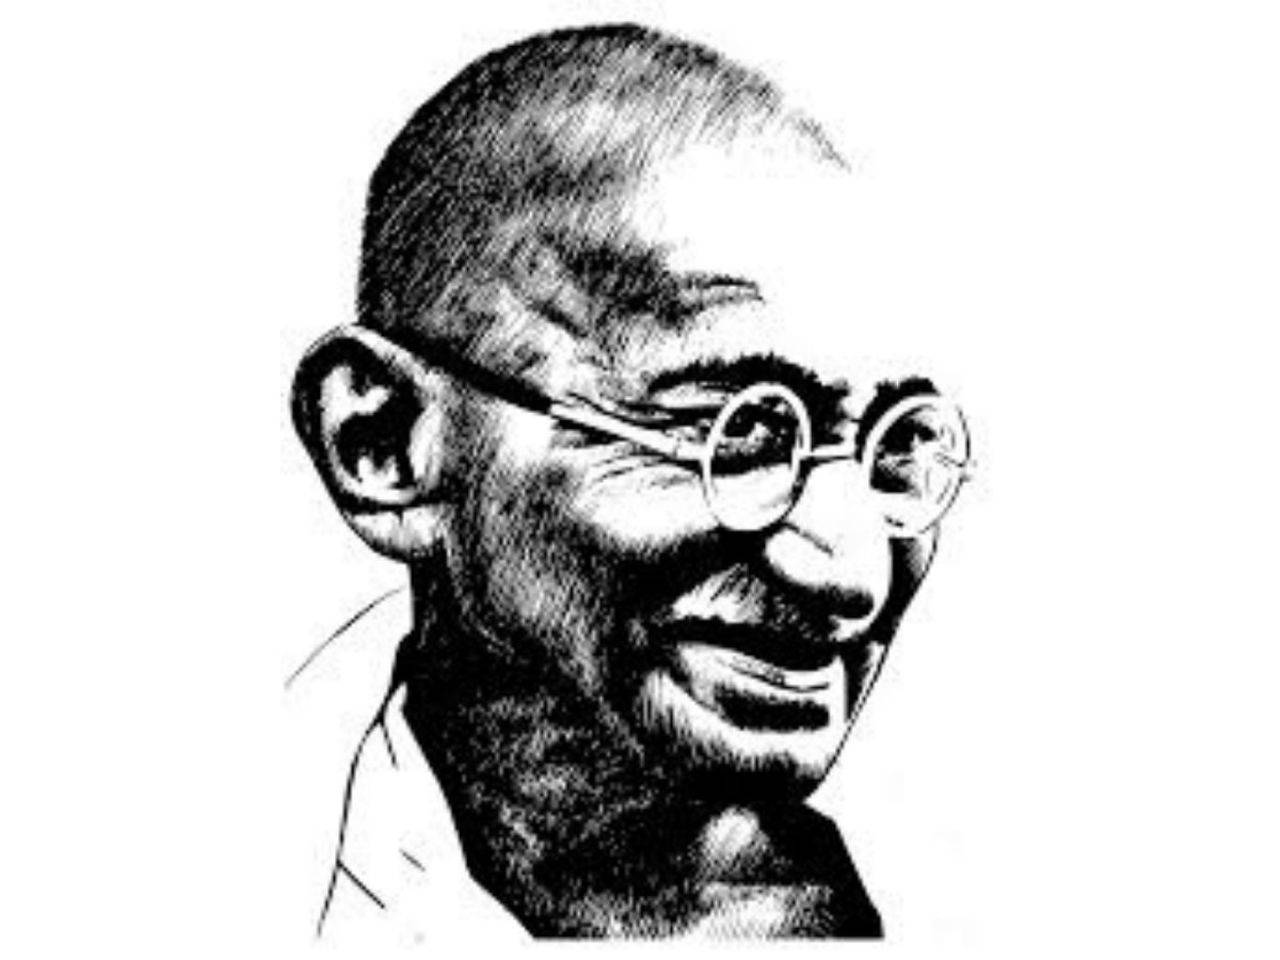 How To Draw Mahatma Gandhi - Mahatma Gandhi Drawing Easy Transparent PNG -  550x720 - Free Download on NicePNG